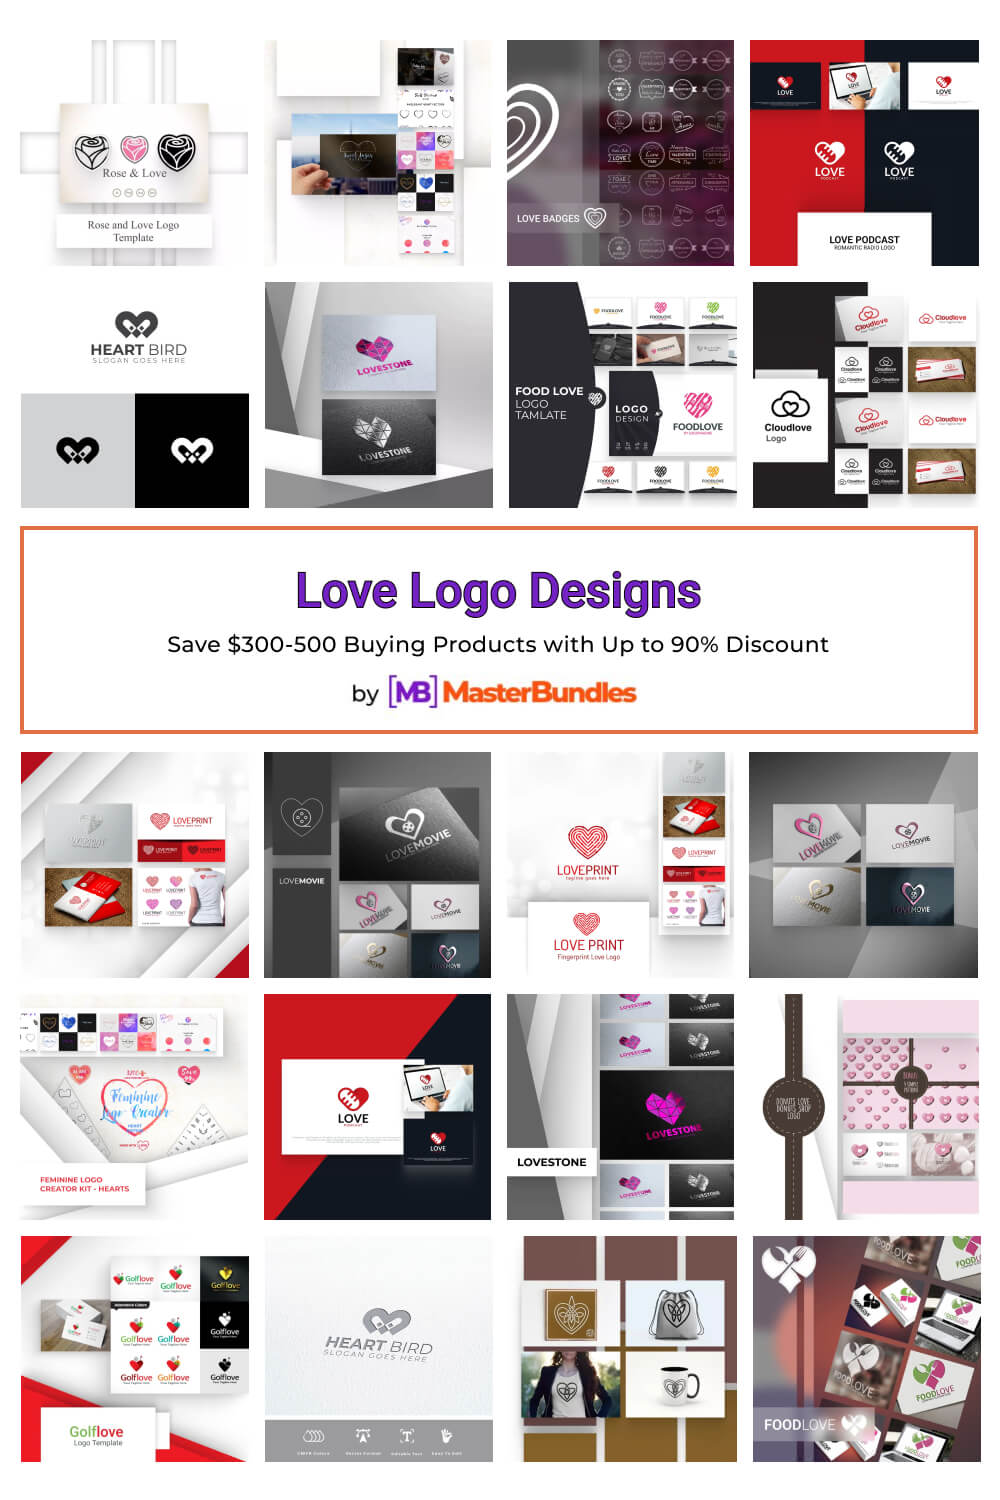 love logo designs pinterest image.